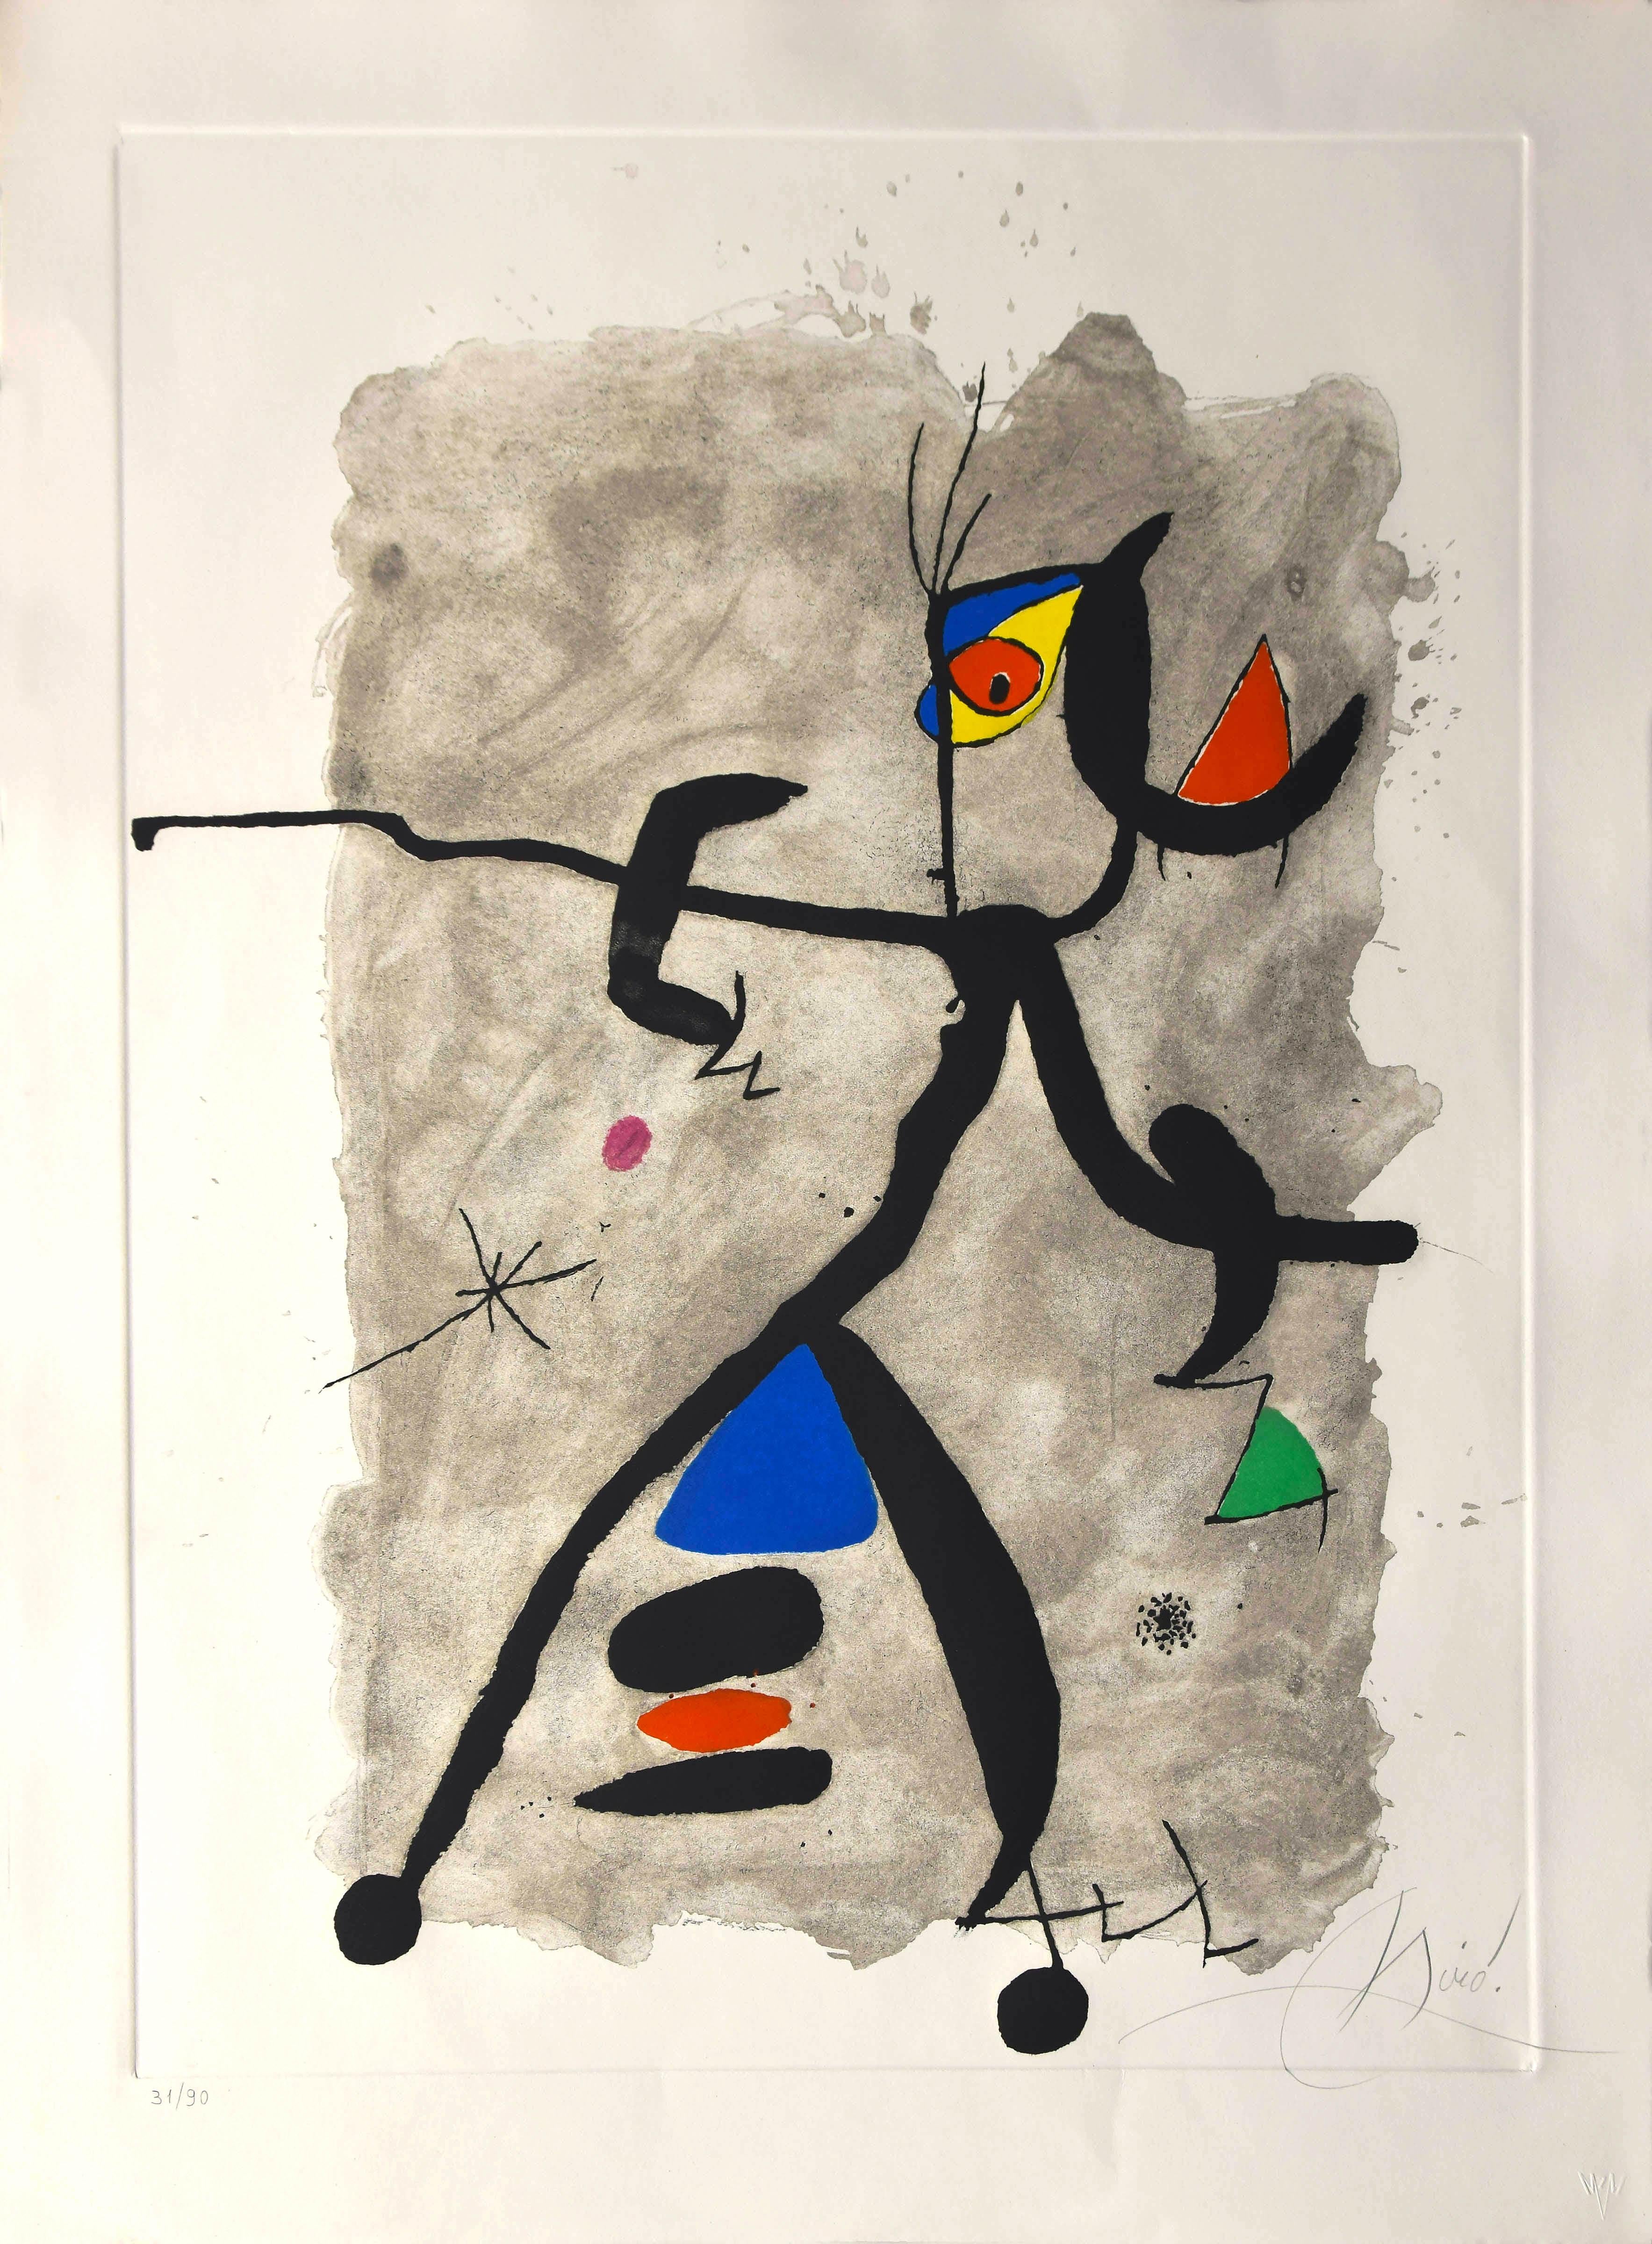 Joan Miró Abstract Print - Constellation III - Original Etching by Joan Mirò - 1975